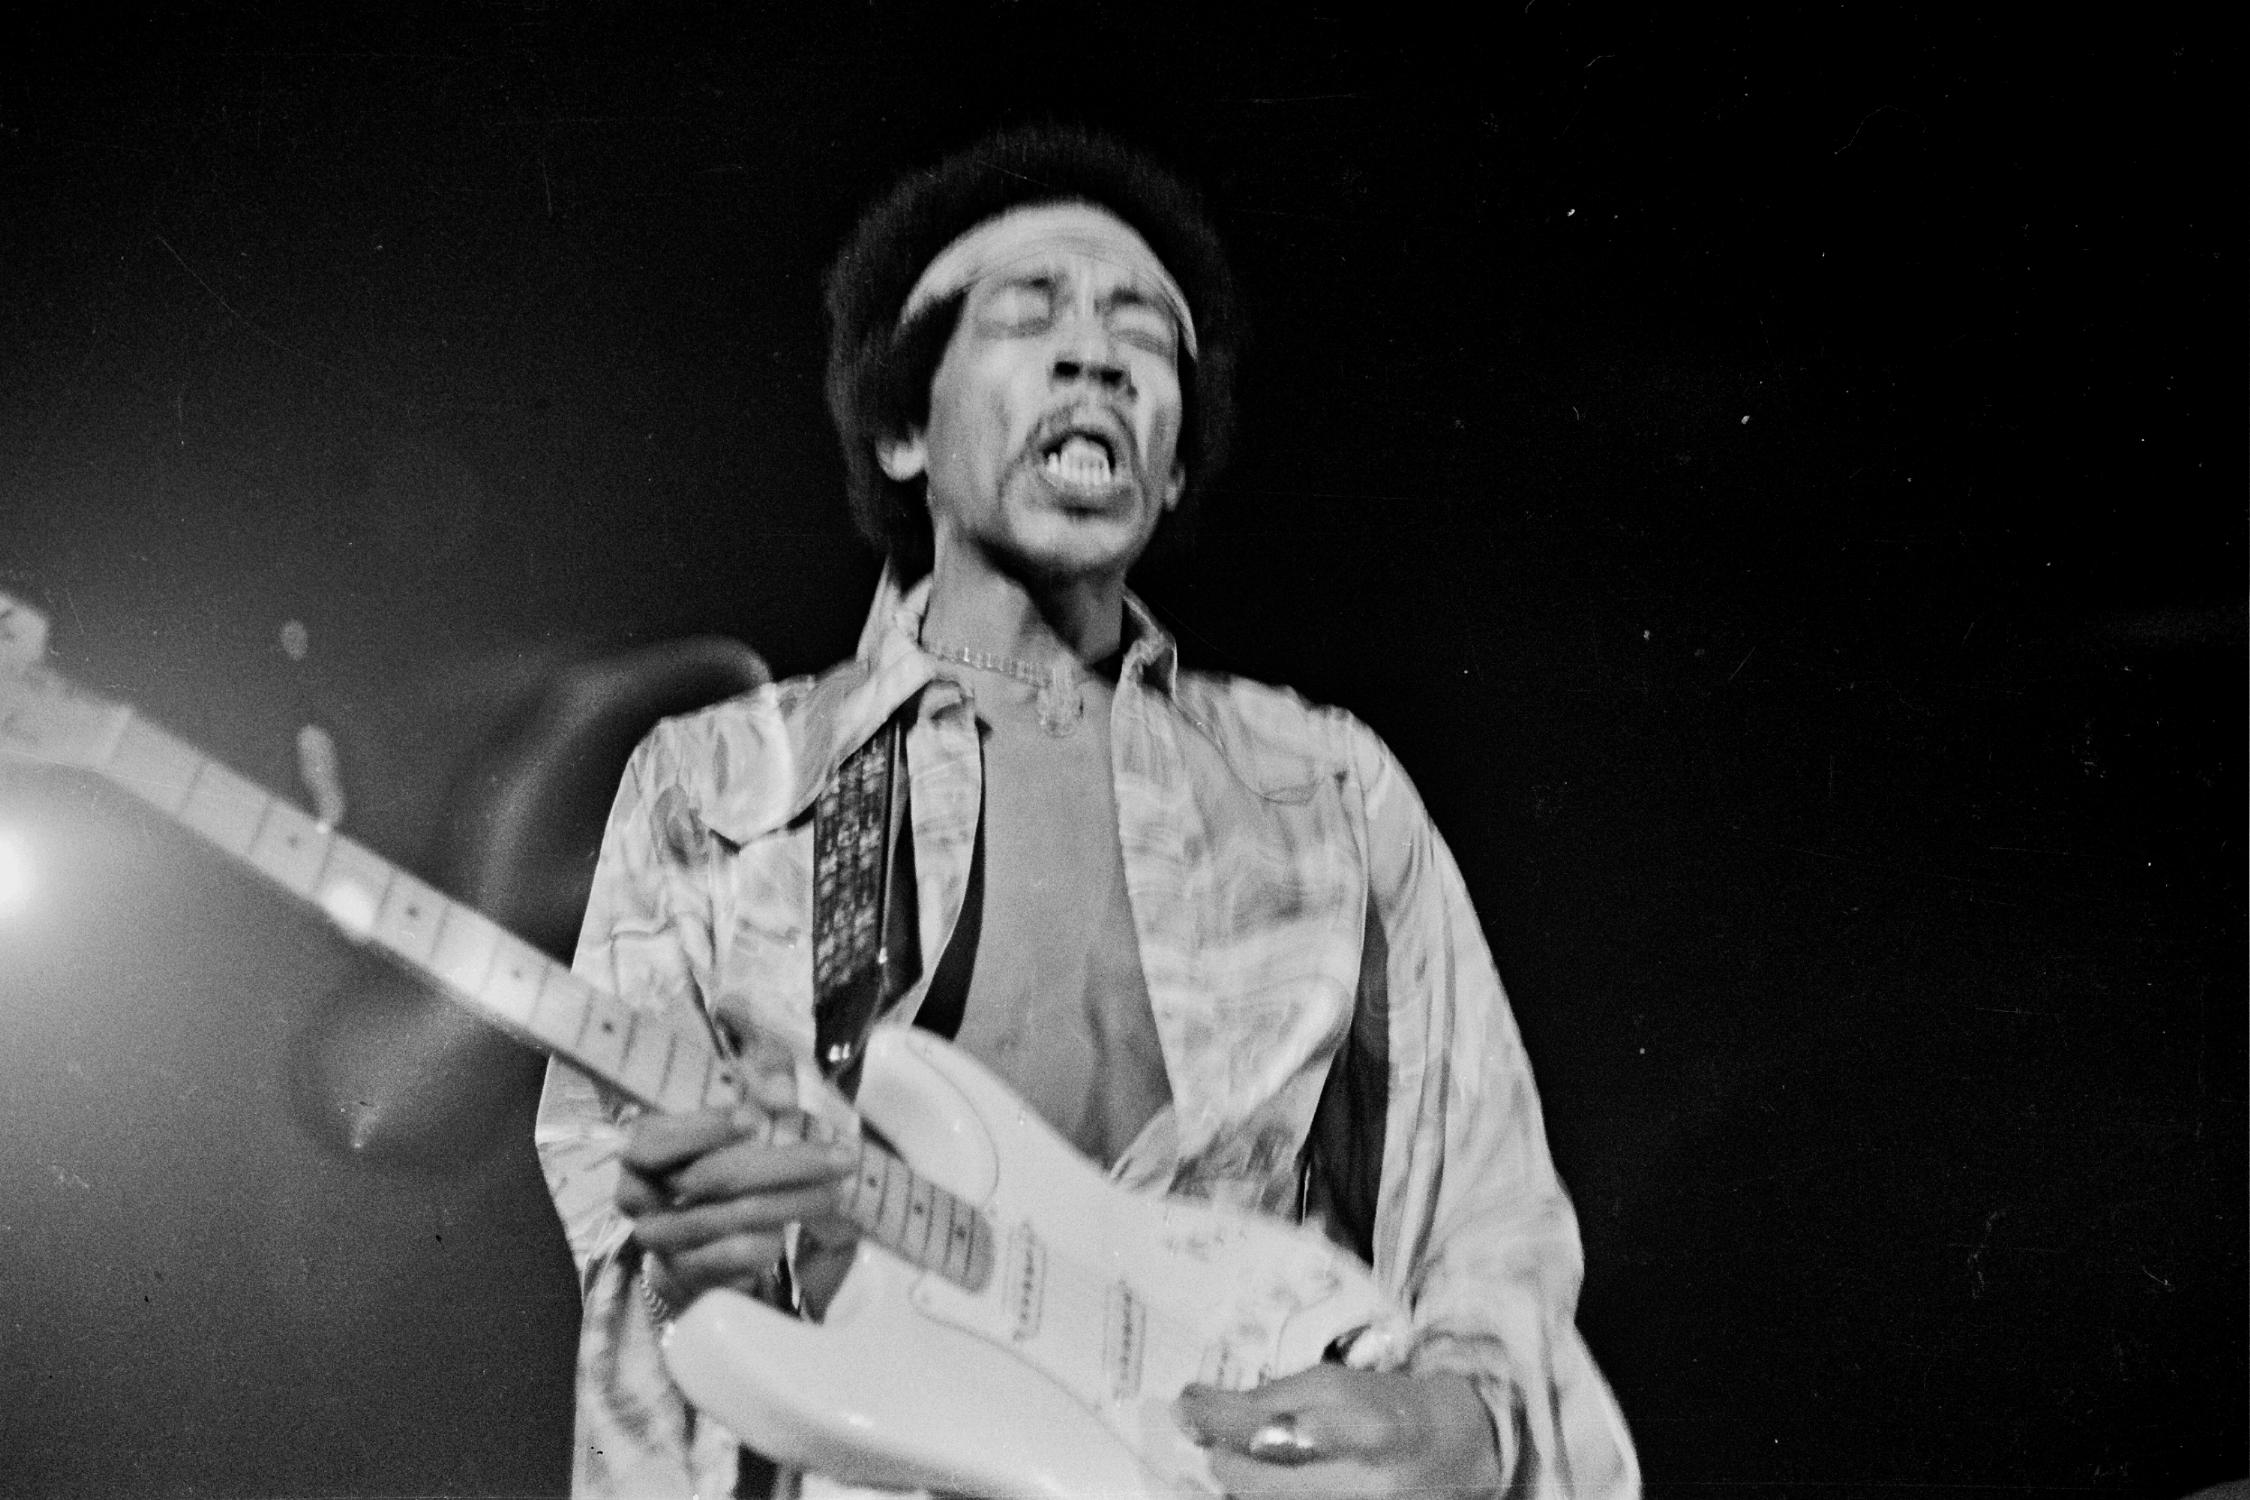 Grant Harper Reid Black and White Photograph - Jimi Hendrix in Action on Stage Fine Art Print